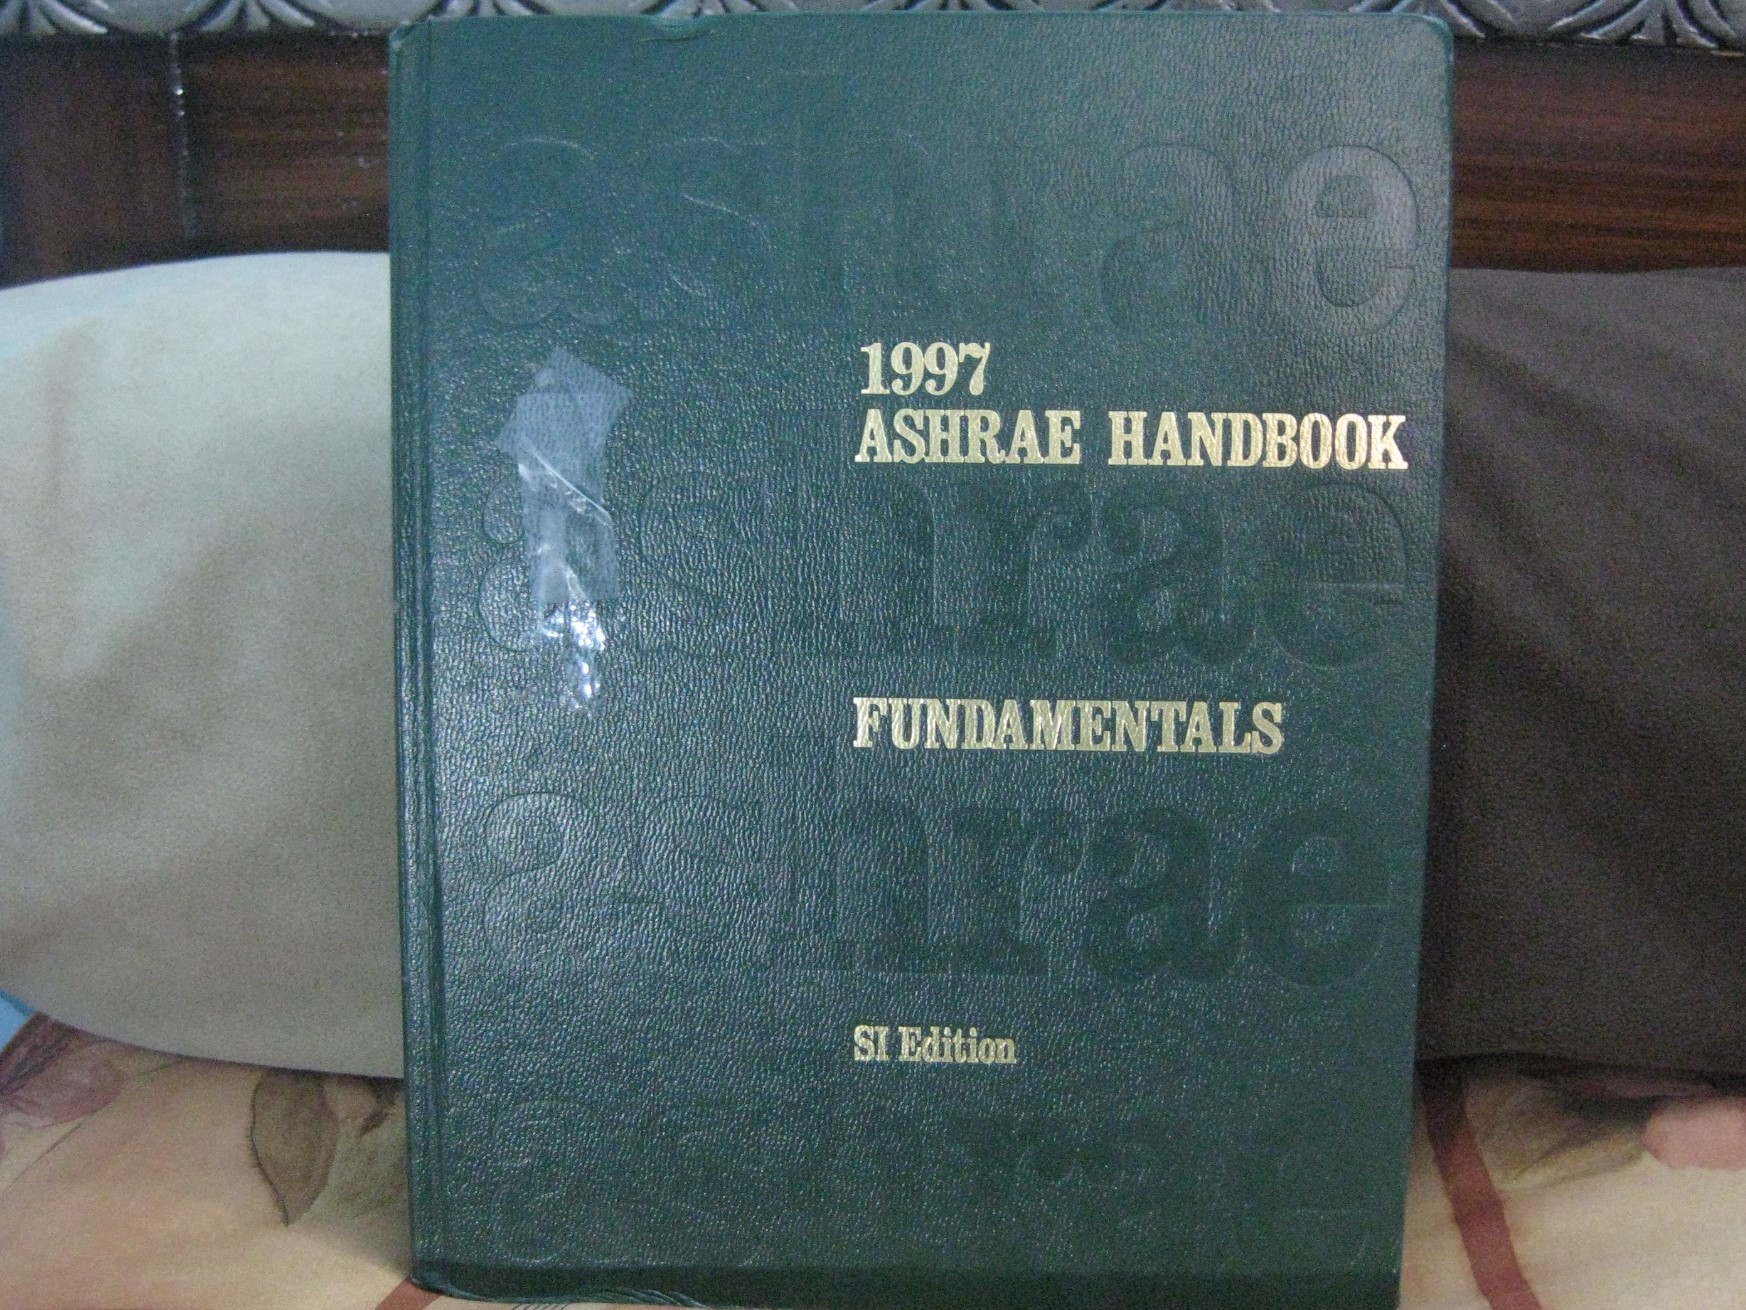 1997 ashrae handbook fundamentals-si edition